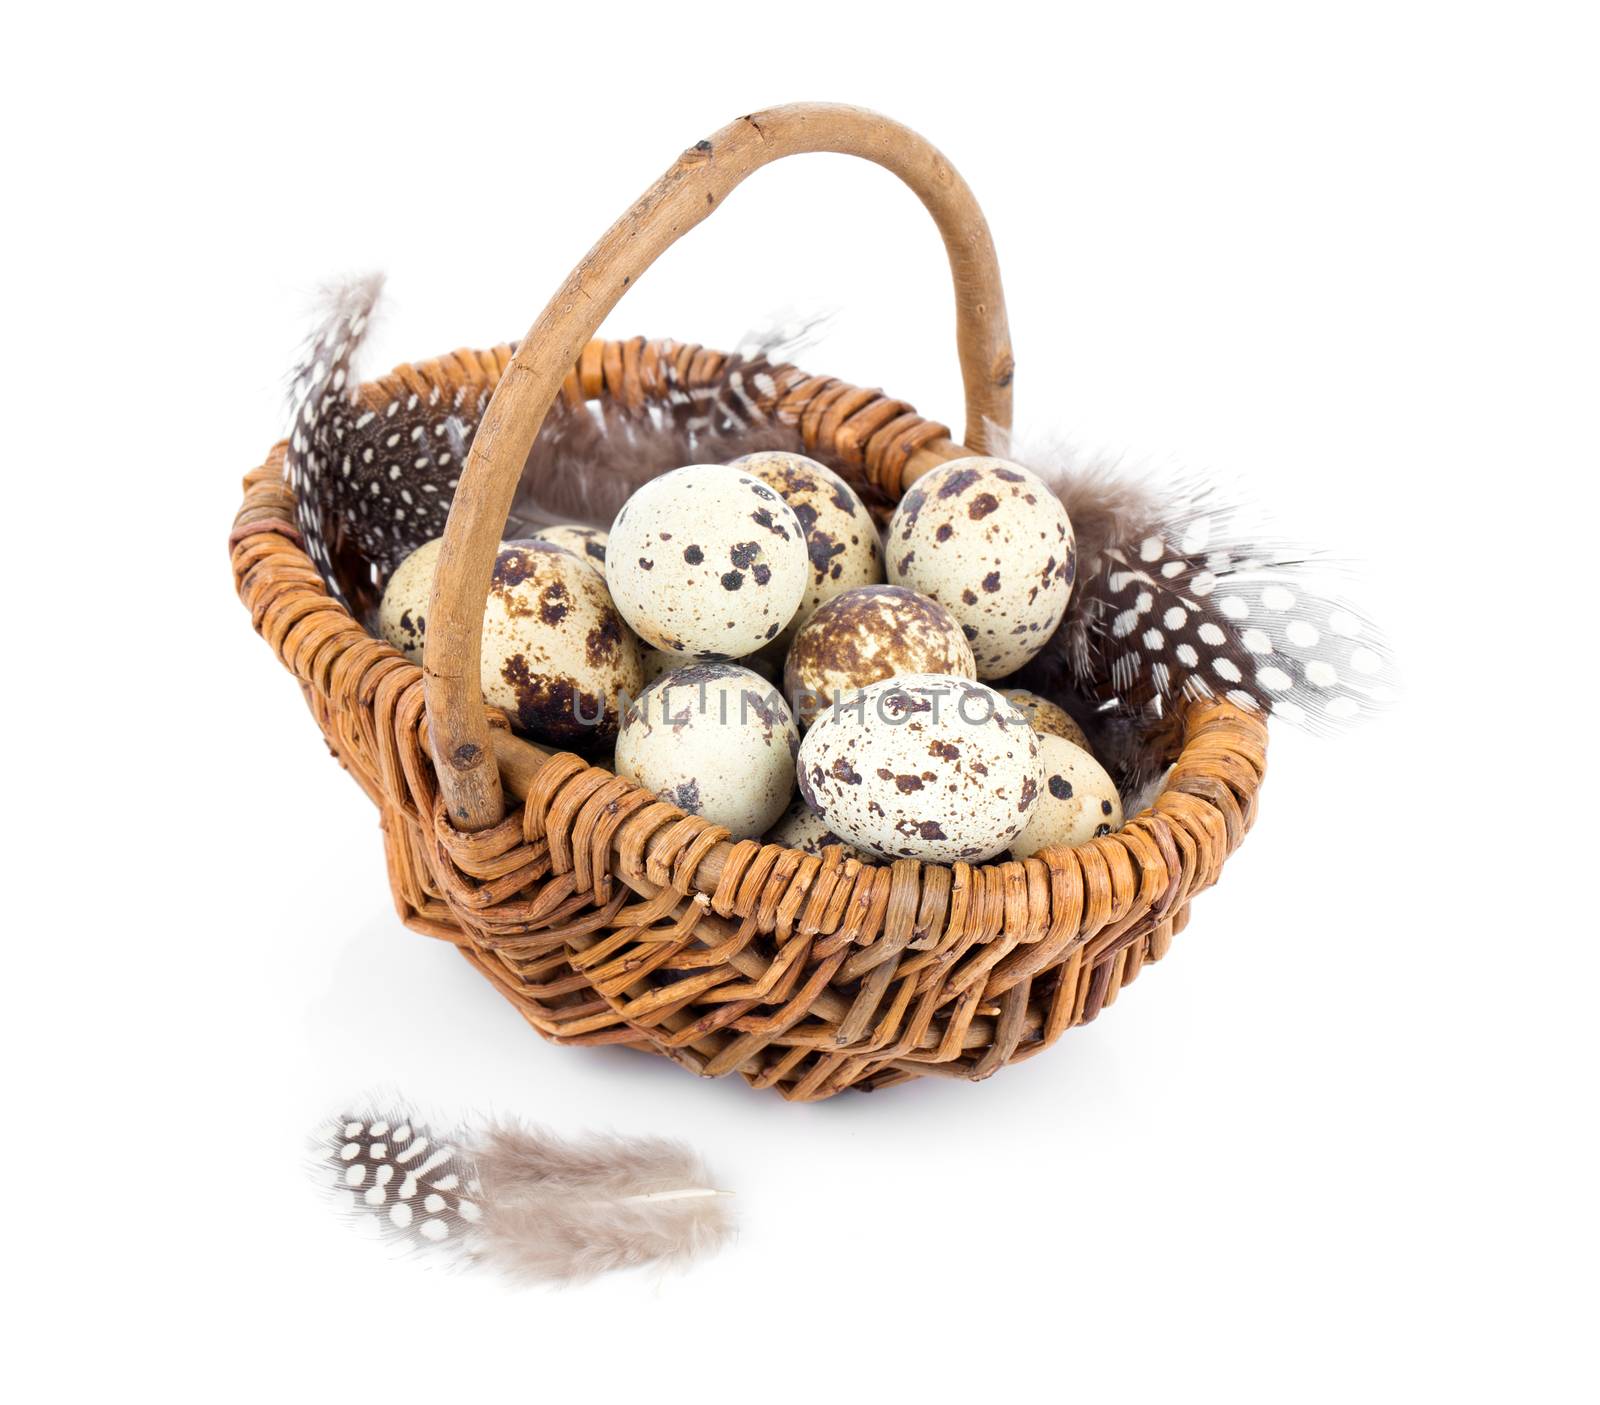 quail eggs in a wicker basket on white background by motorolka